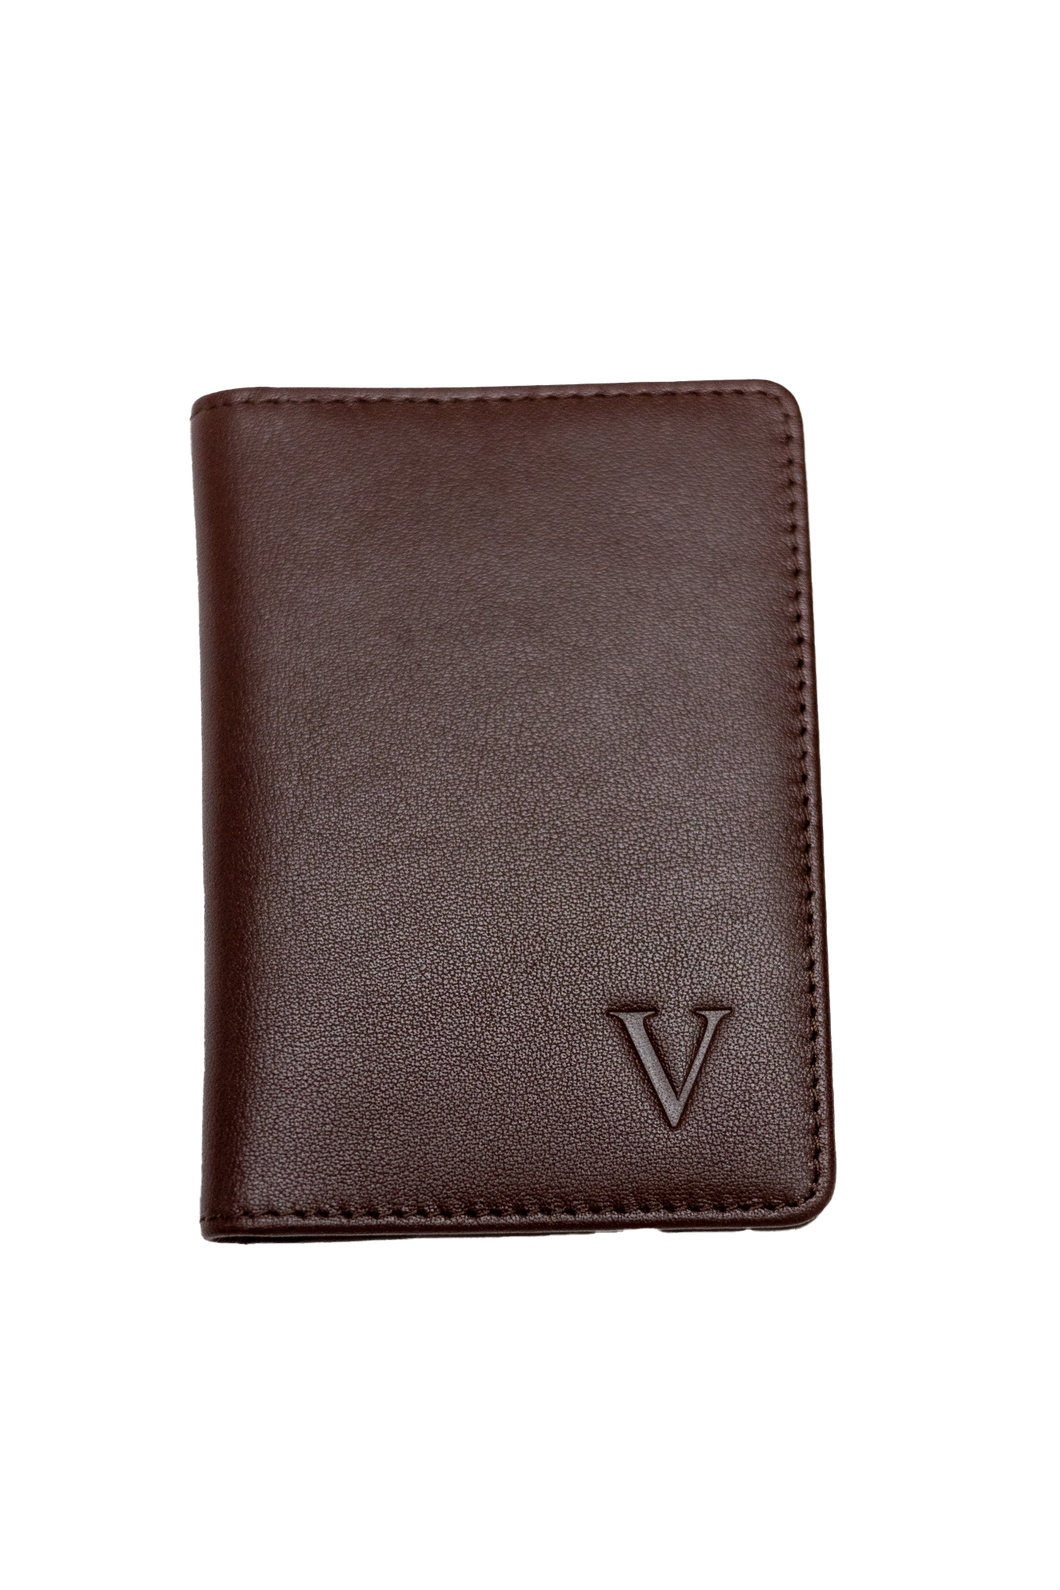 Men's Brown Leather Wallet | Men's Brown Wallet | Brown Leather Wallet